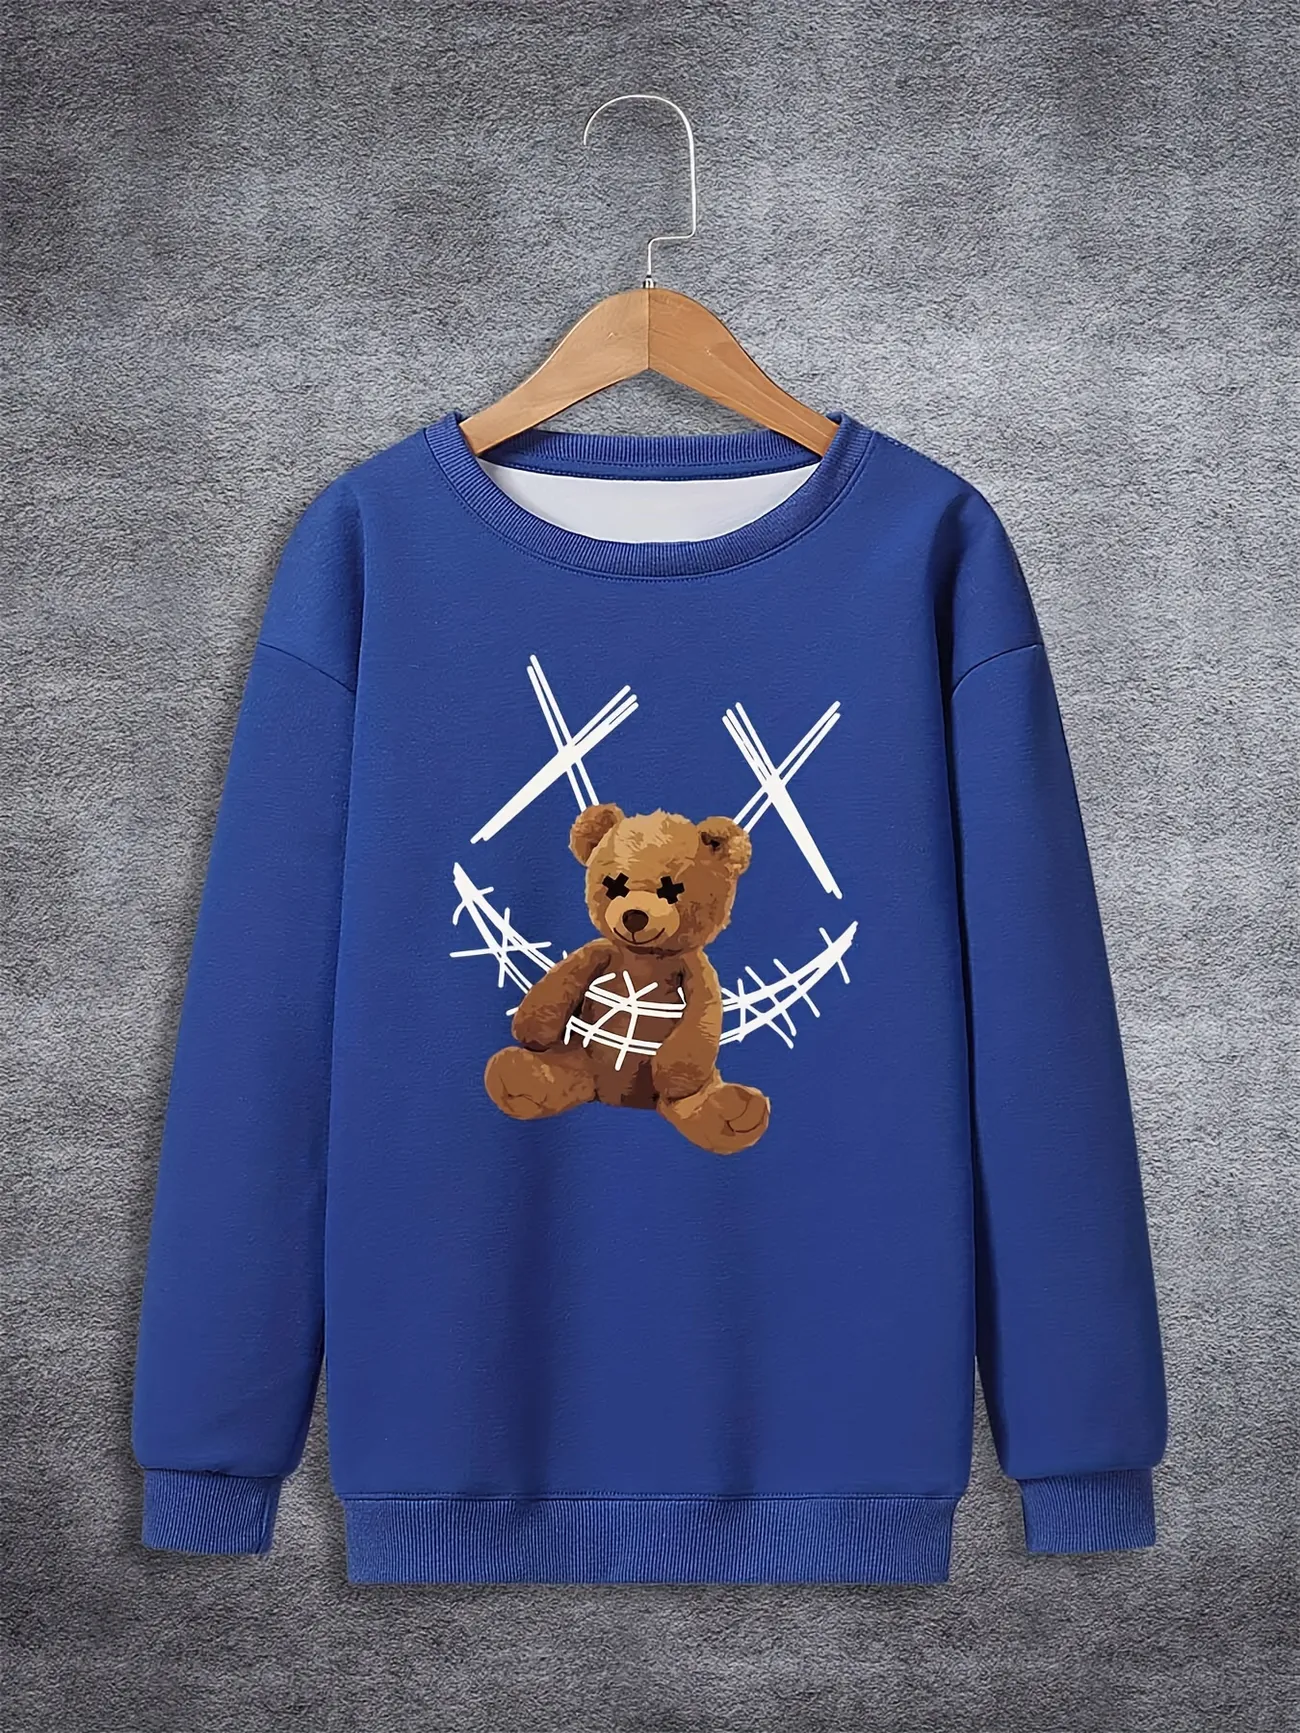 Boy's Trendy Casual Sweatshirt With Anime Bear & Smile Face Print